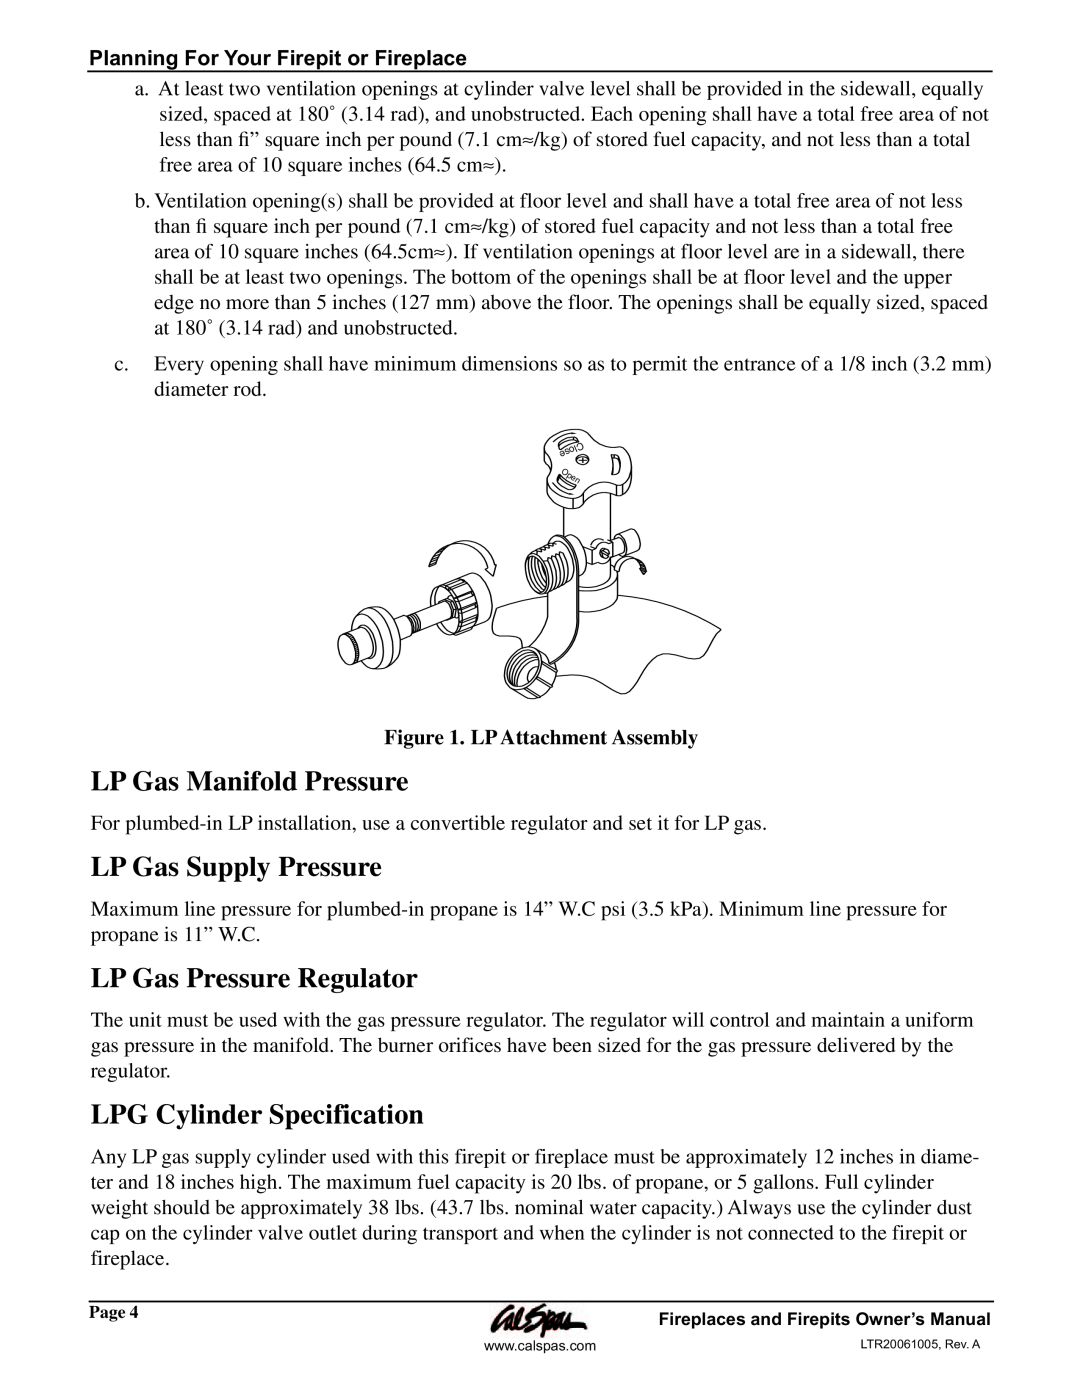 Cal Flame Fireplaces & Firepits 2006 manual LP Gas Manifold Pressure, LP Gas Supply Pressure, LP Gas Pressure Regulator 